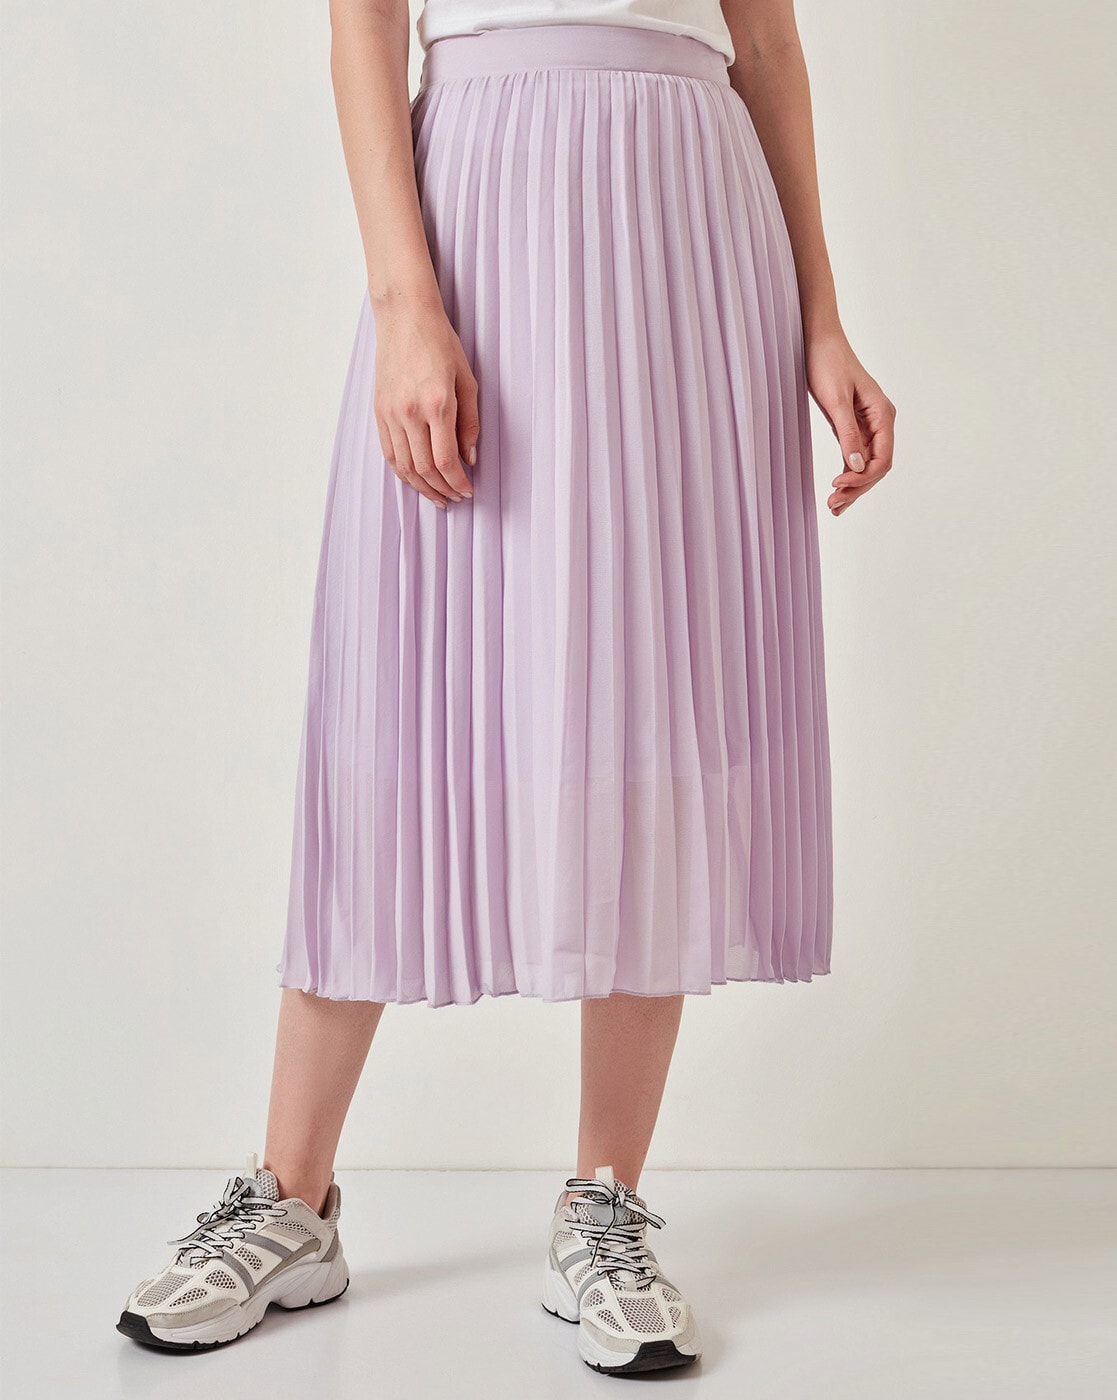 purple skirt for woman